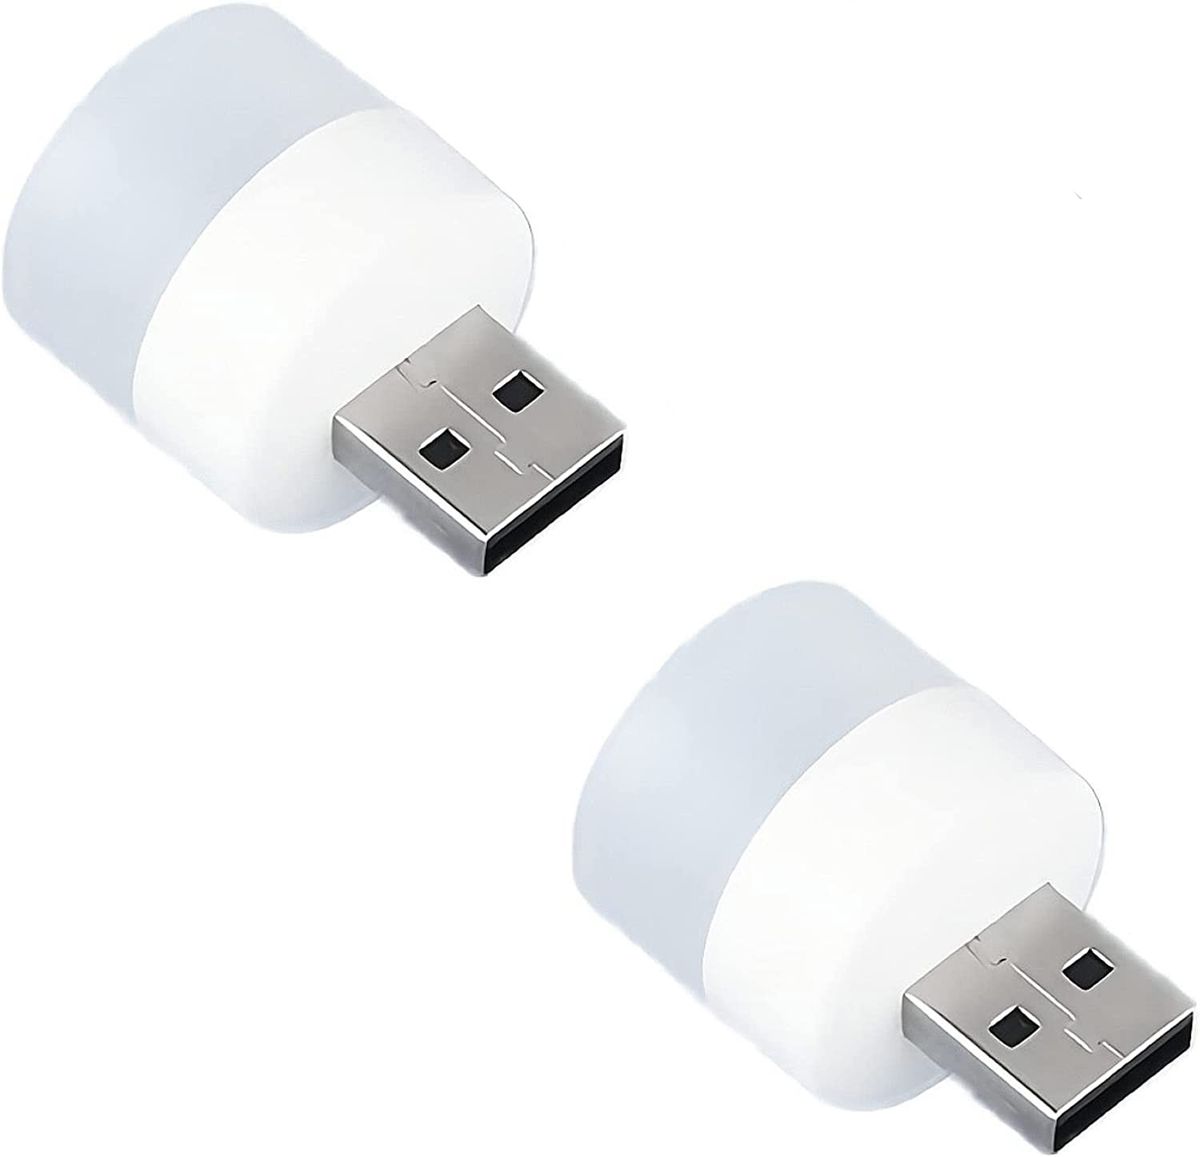 USB LED Lamp - 2 Piece | Shop Today. Get it Tomorrow! | takealot.com